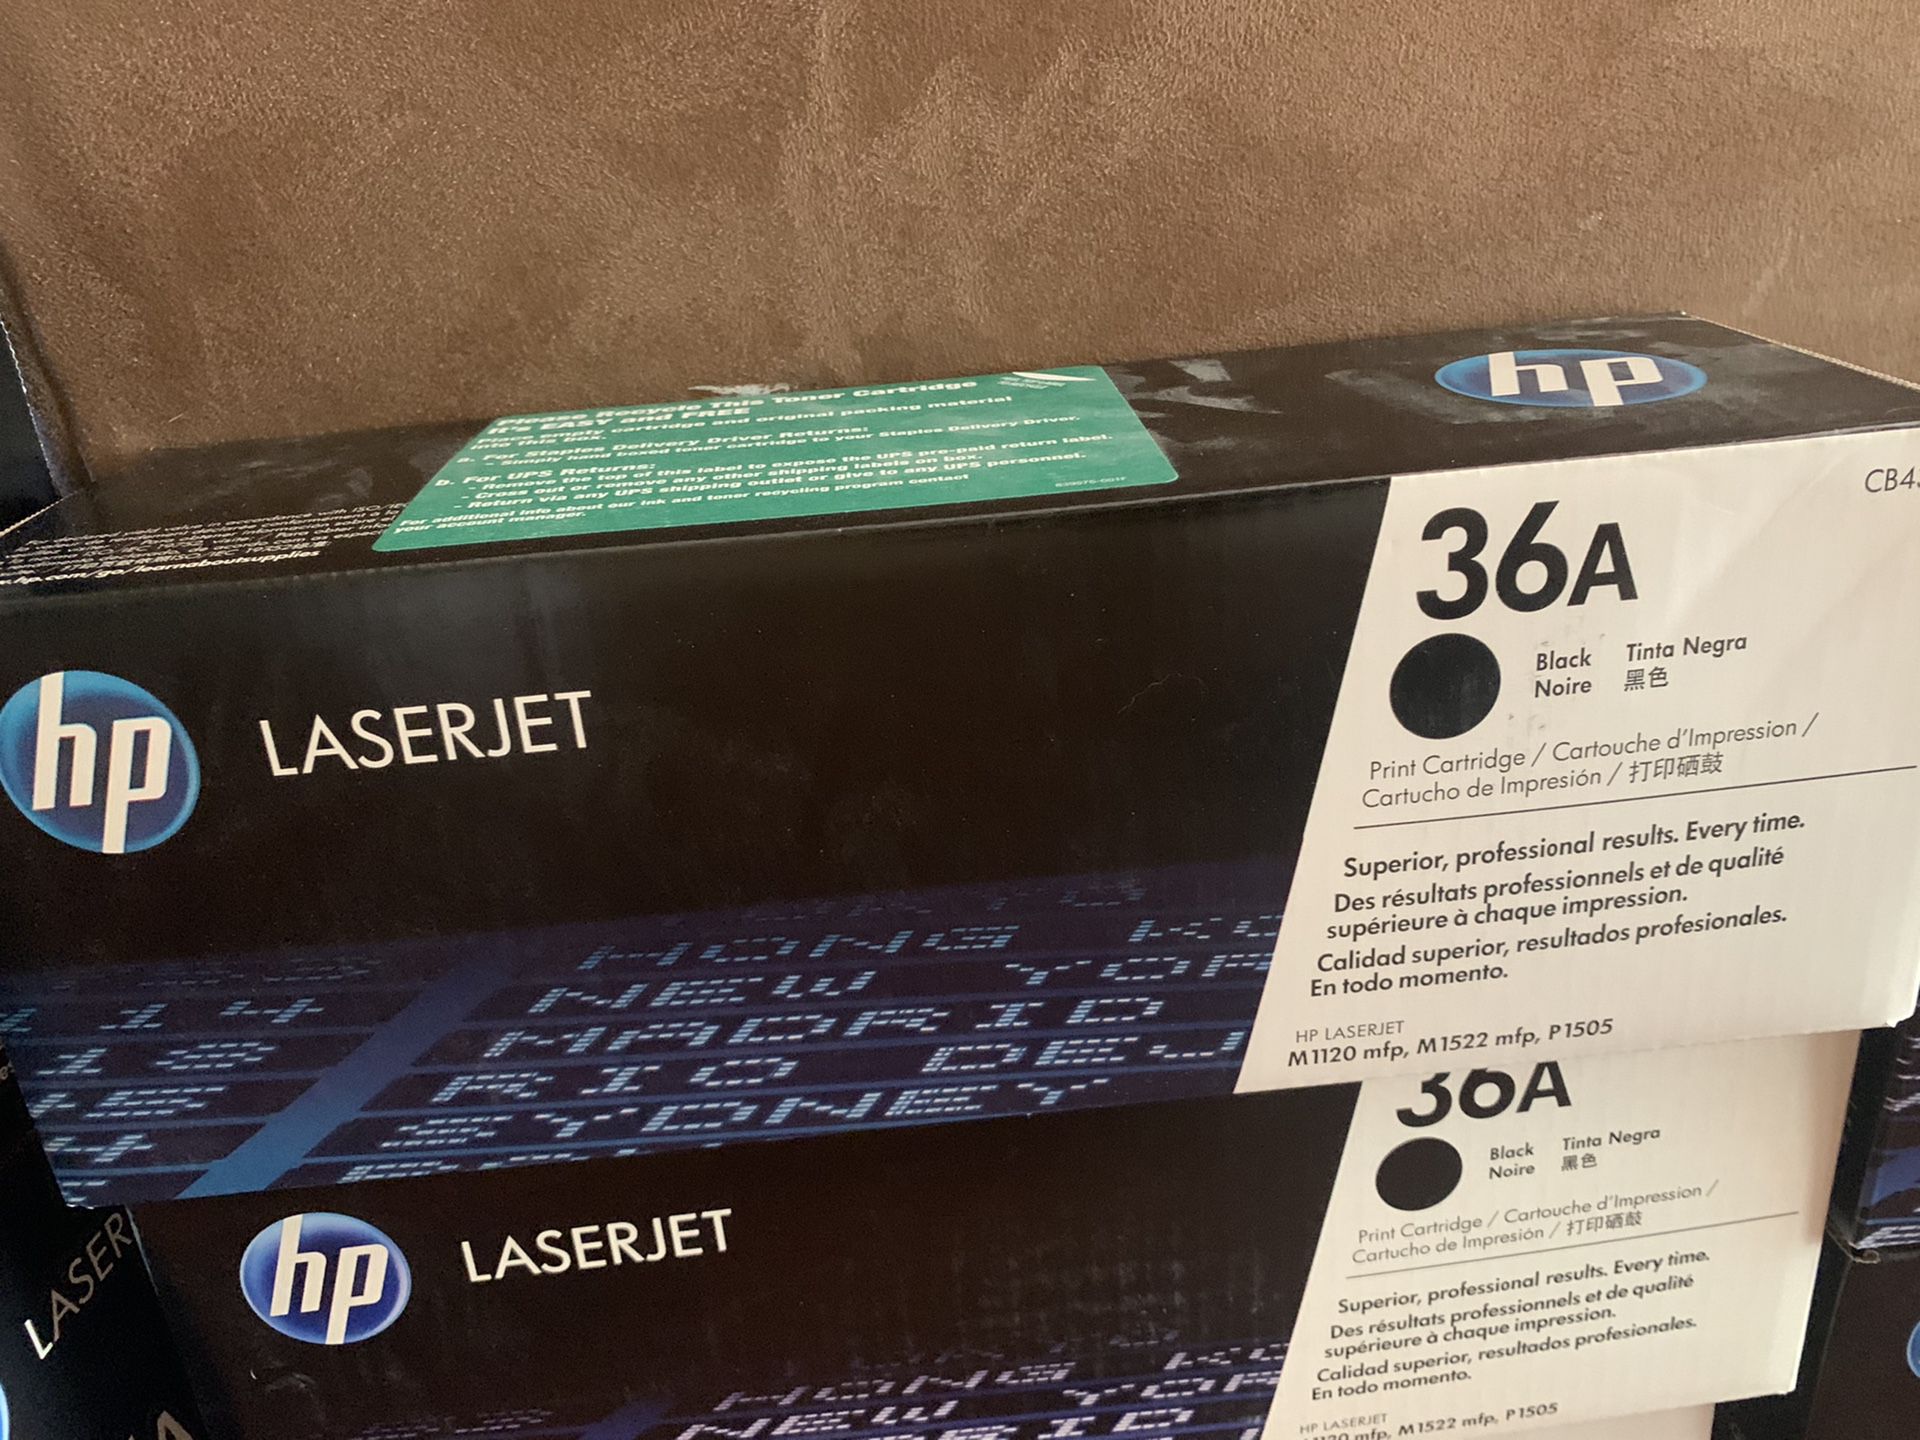 New HP laser jet printer cartridge for CB436a.